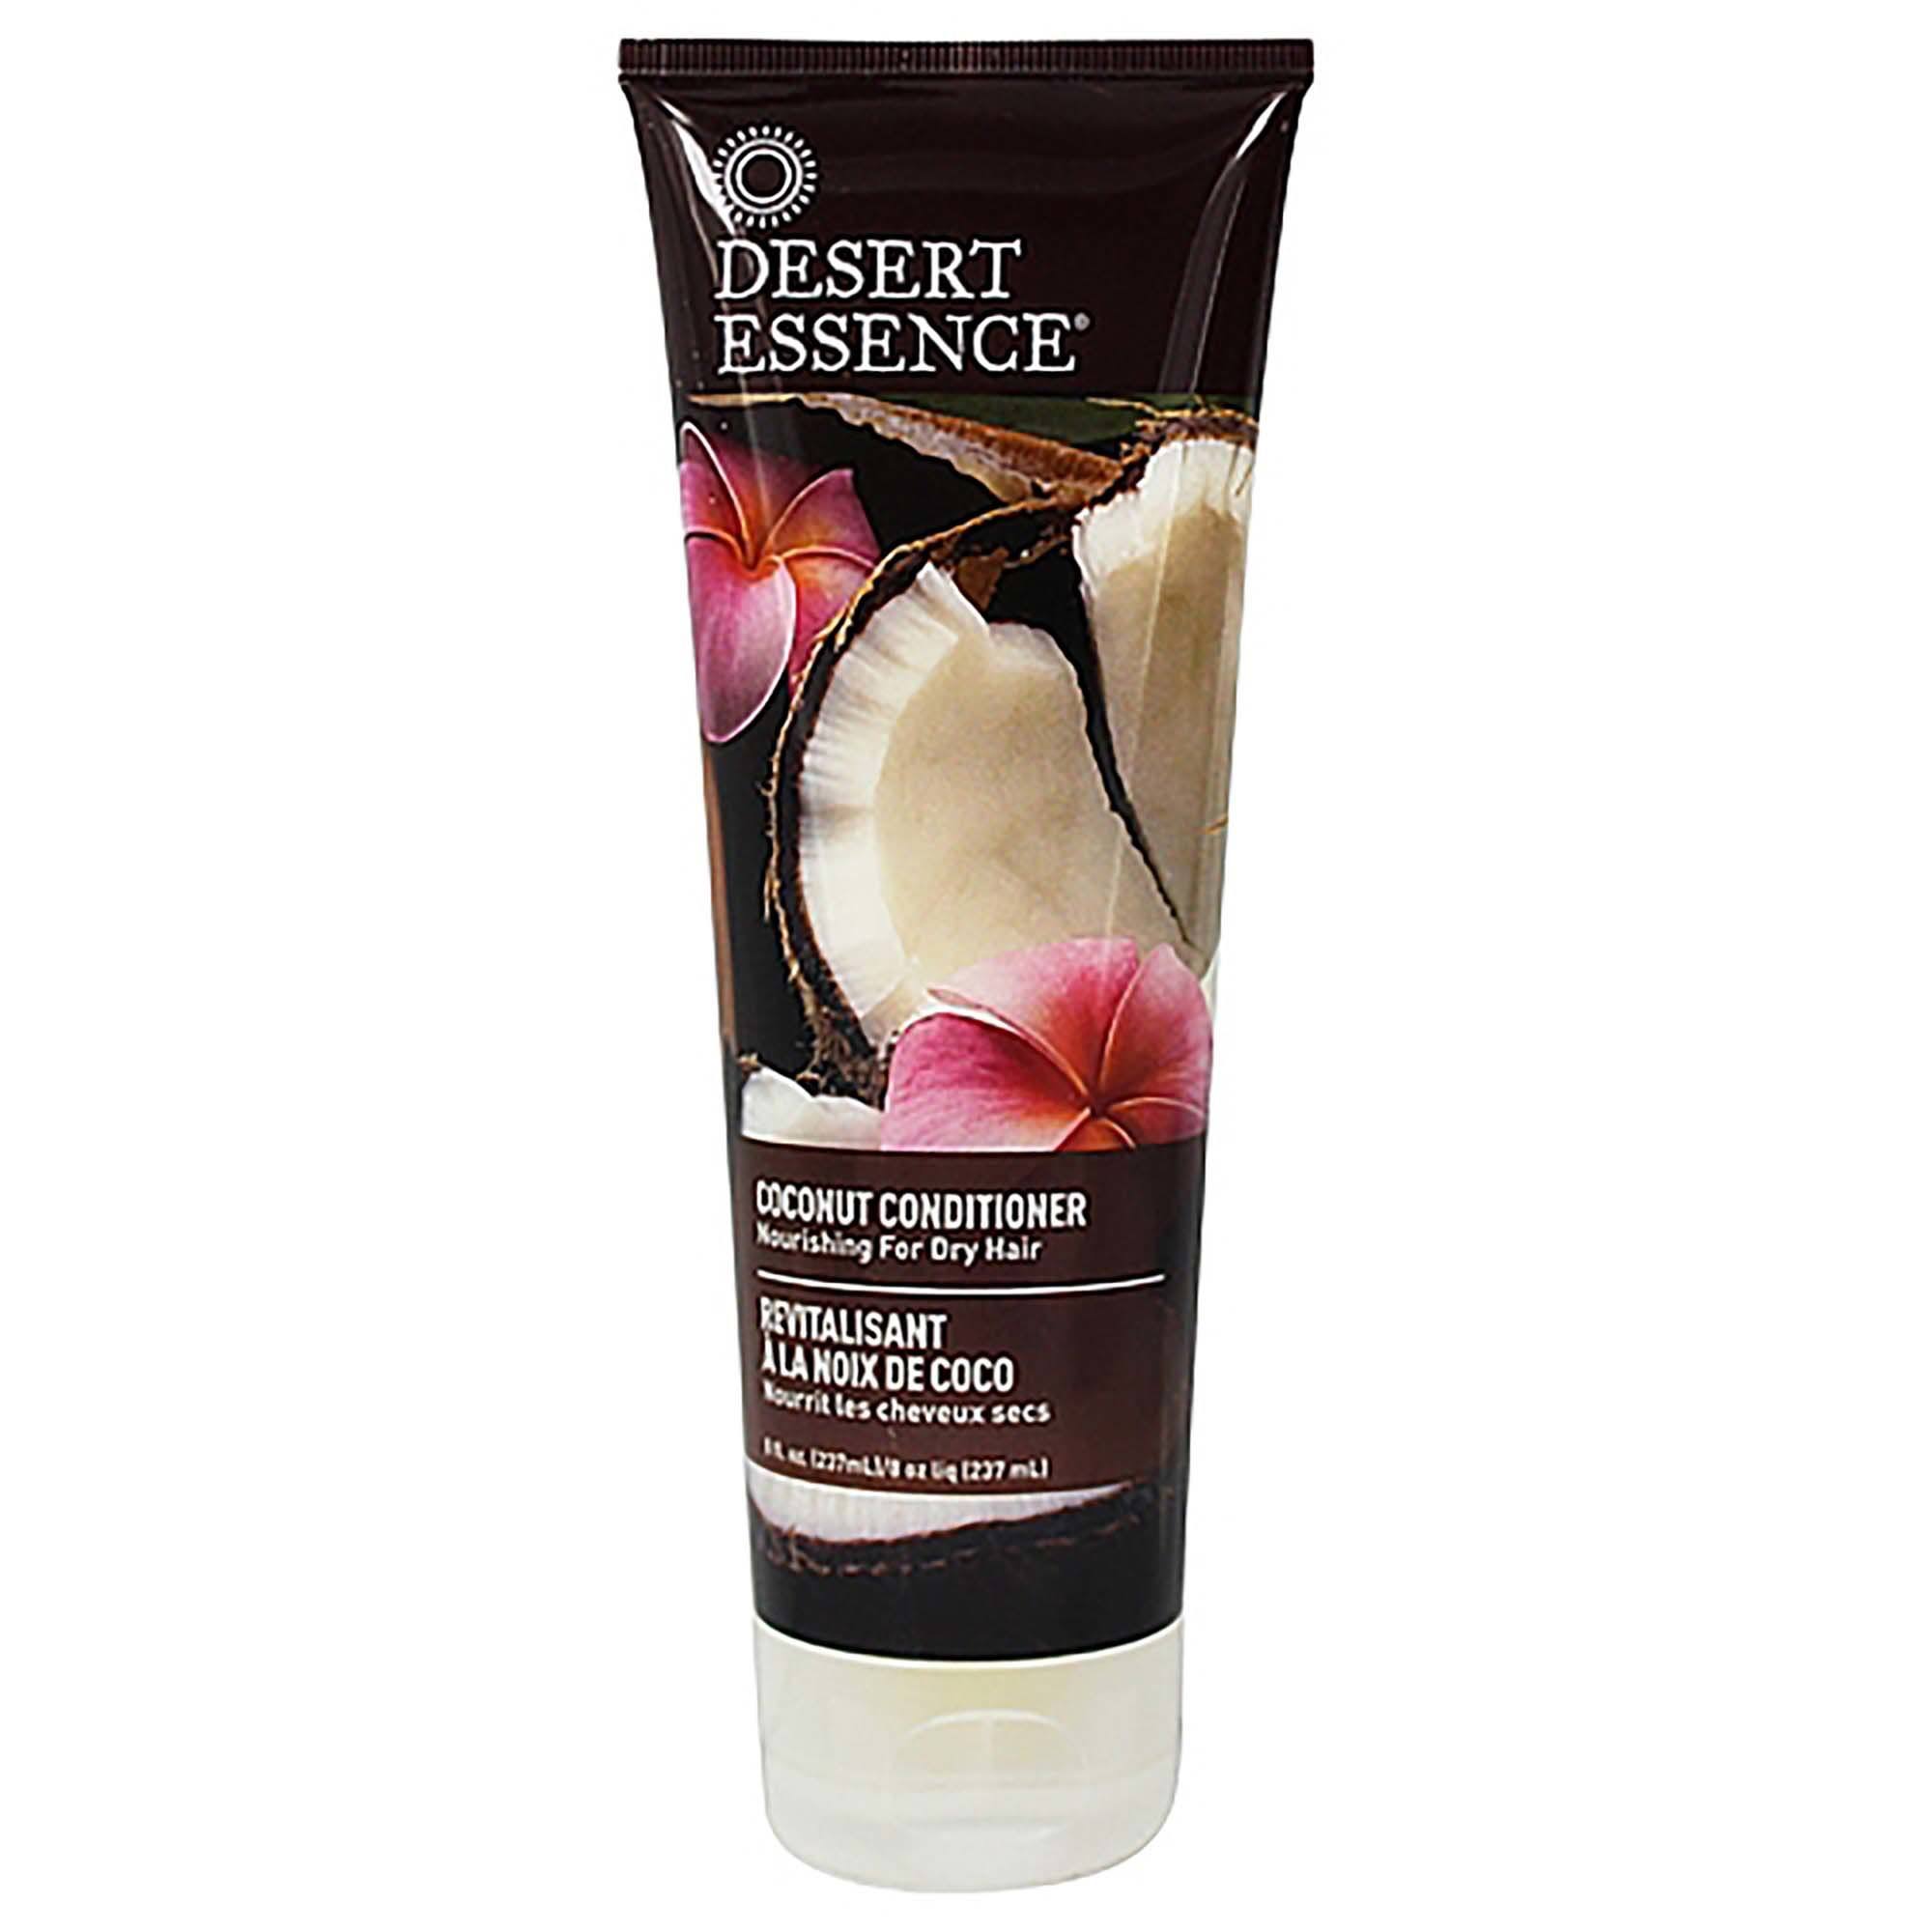 Desert Essence - Coconut Conditioner - 8 fl oz